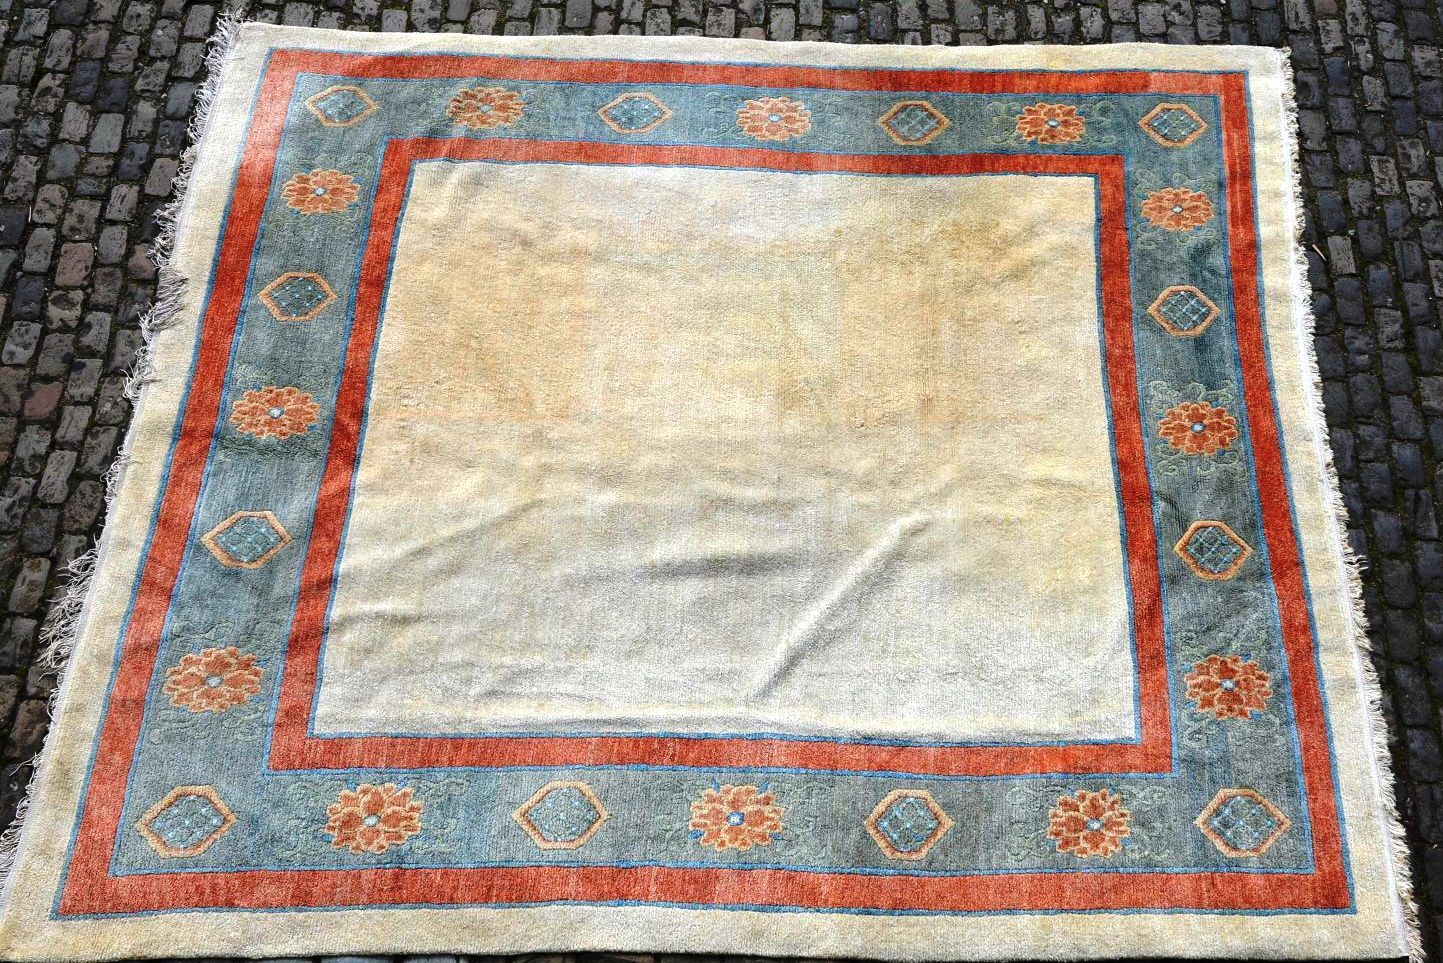 Null 毯子。

伊朗，麦加德

尺寸 : 300 cm x 350 cm